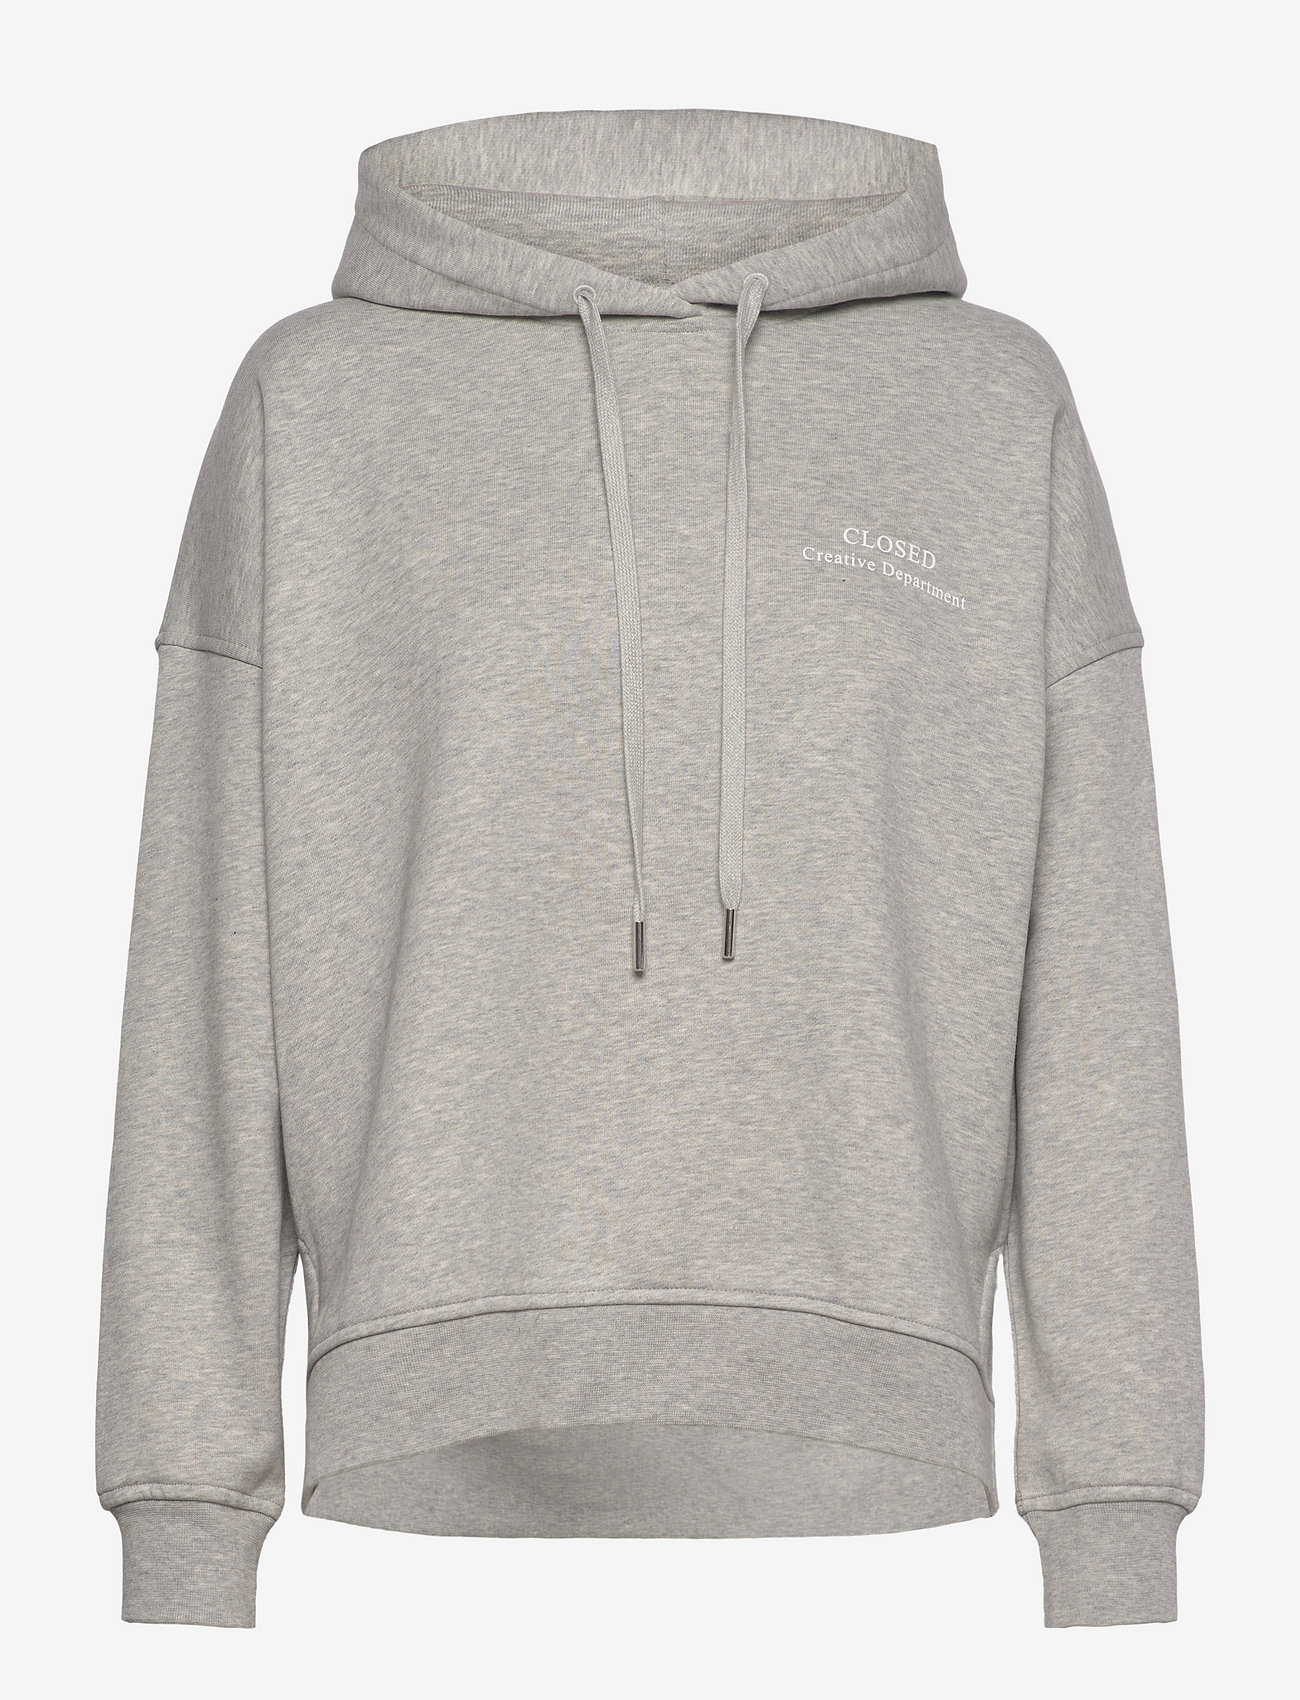 Closed - printed hoodie - sweatshirts et sweats à capuche - light grey melange - 1